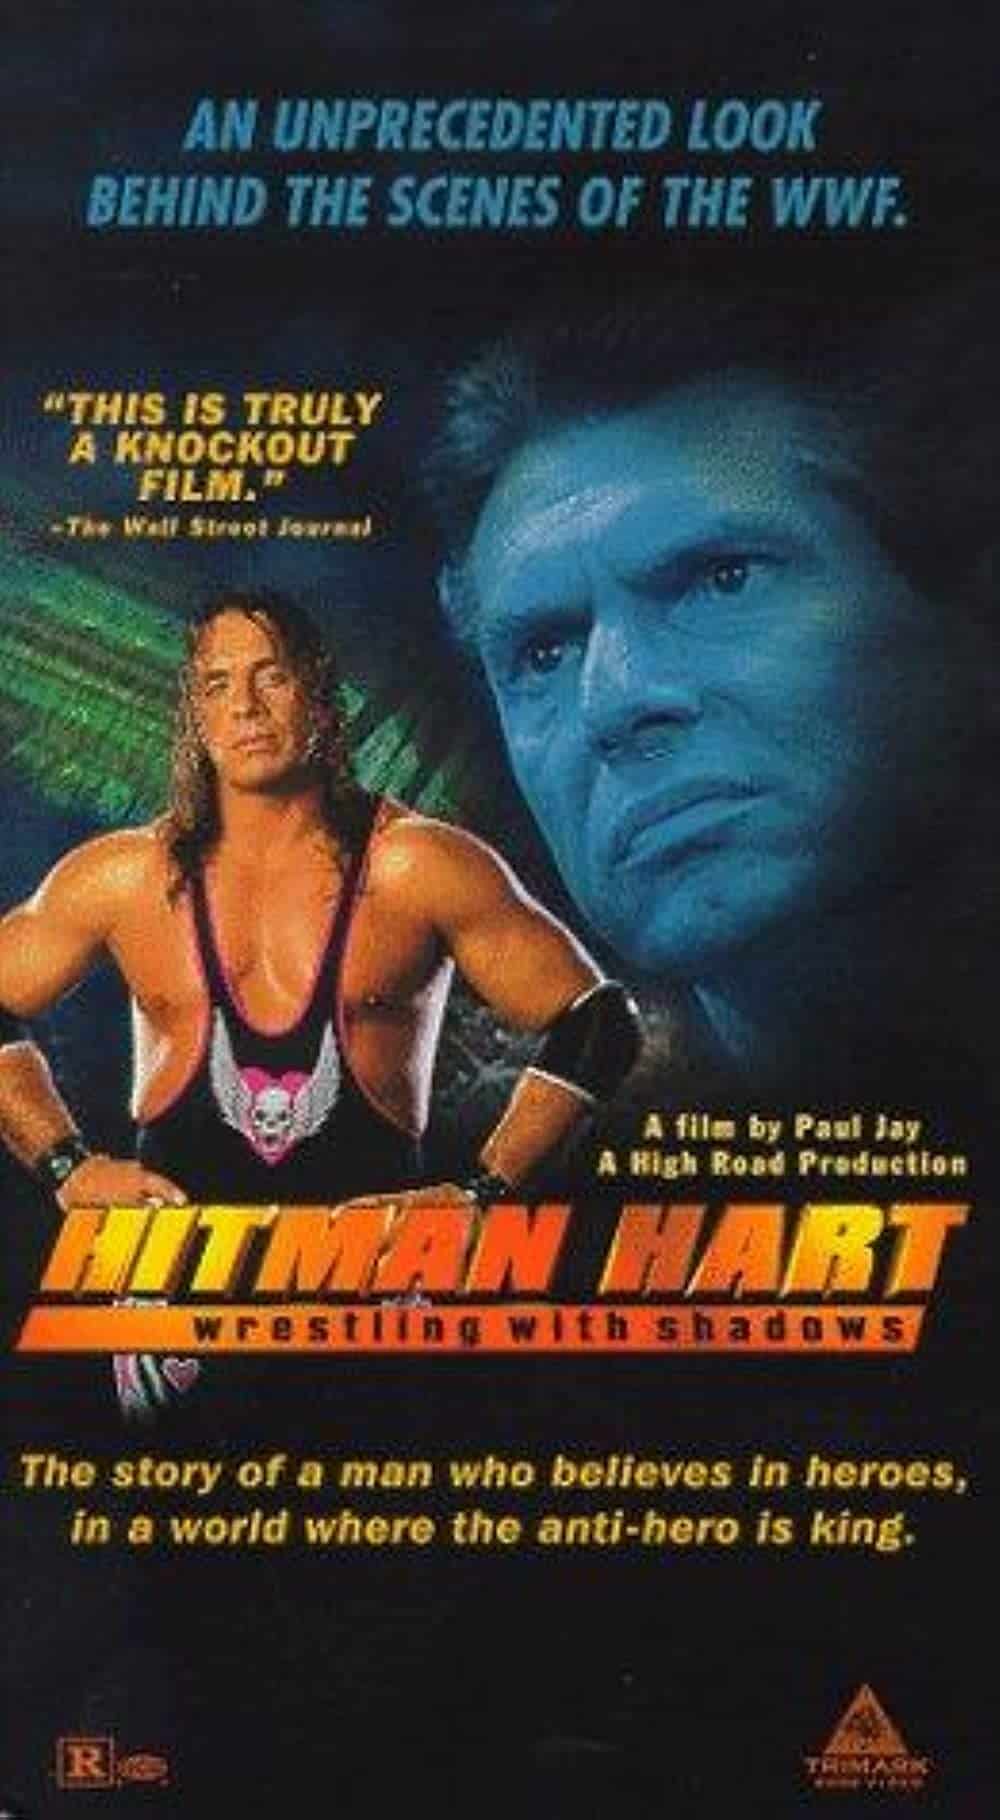 Hitman Hart Wrestling with Shadows (1998)